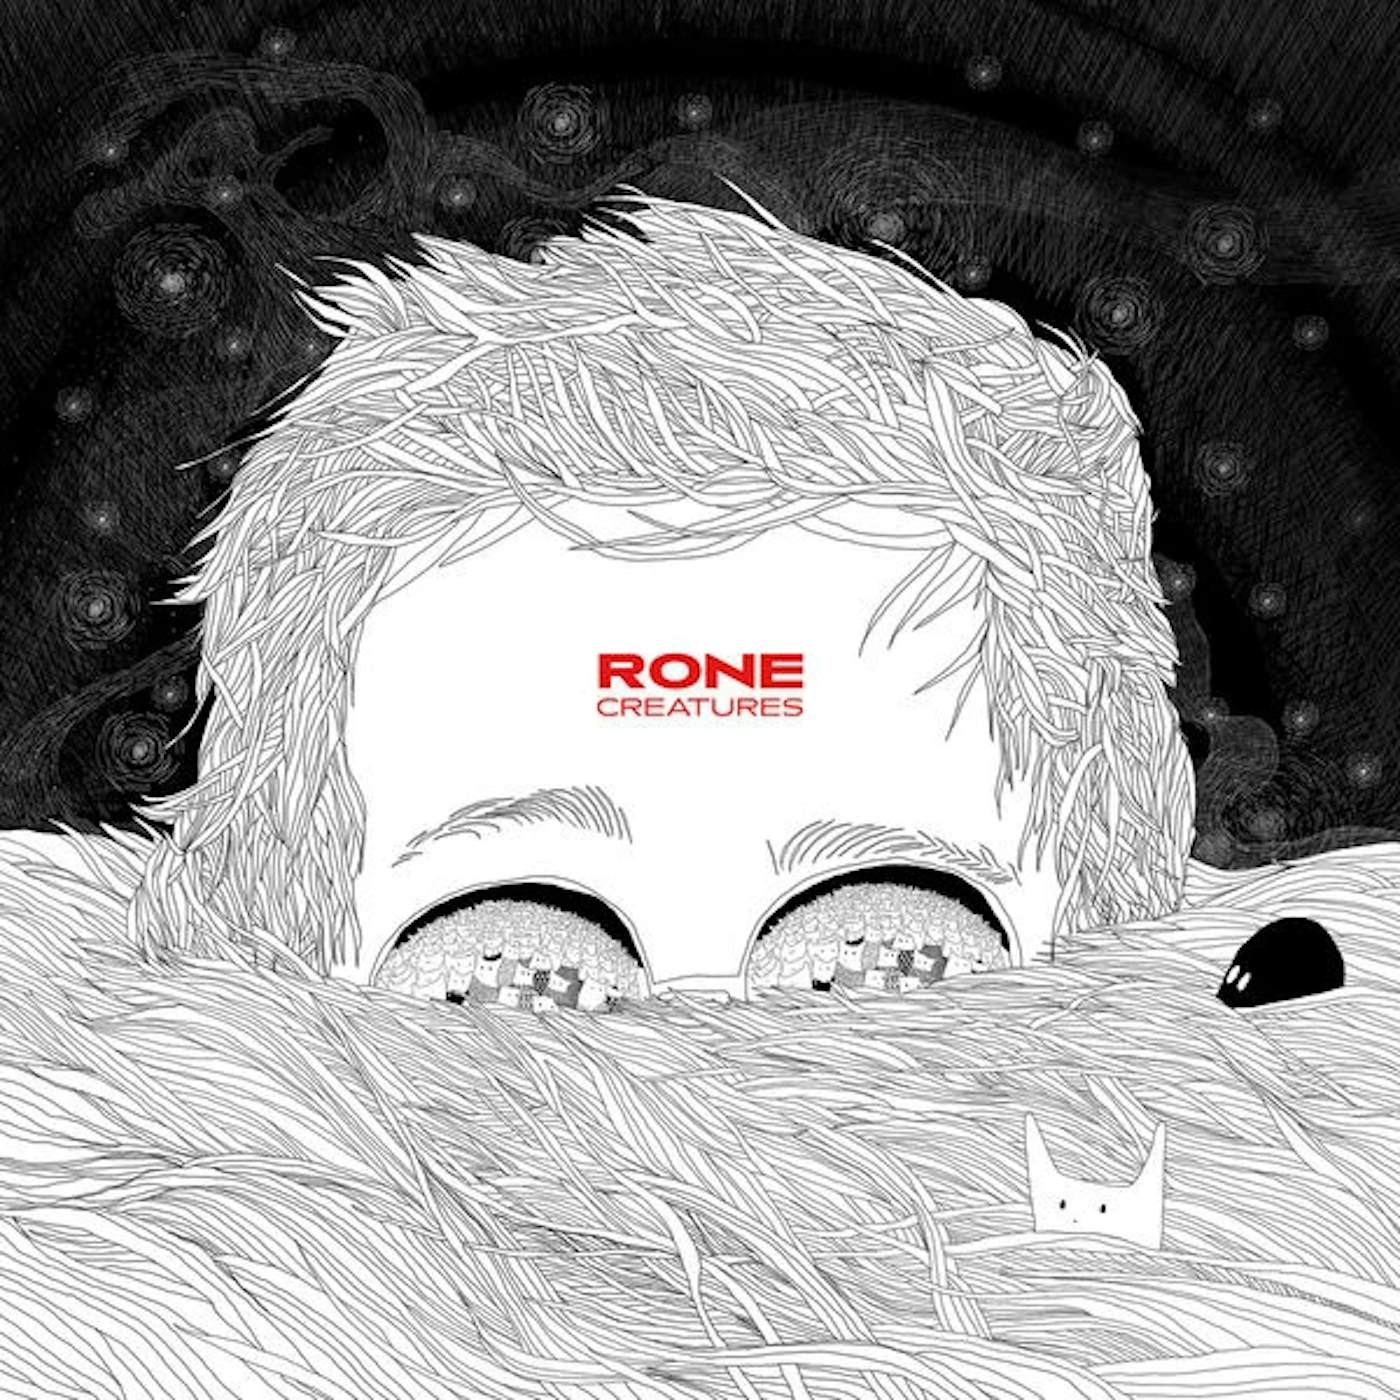 Rone Creatures Vinyl Record